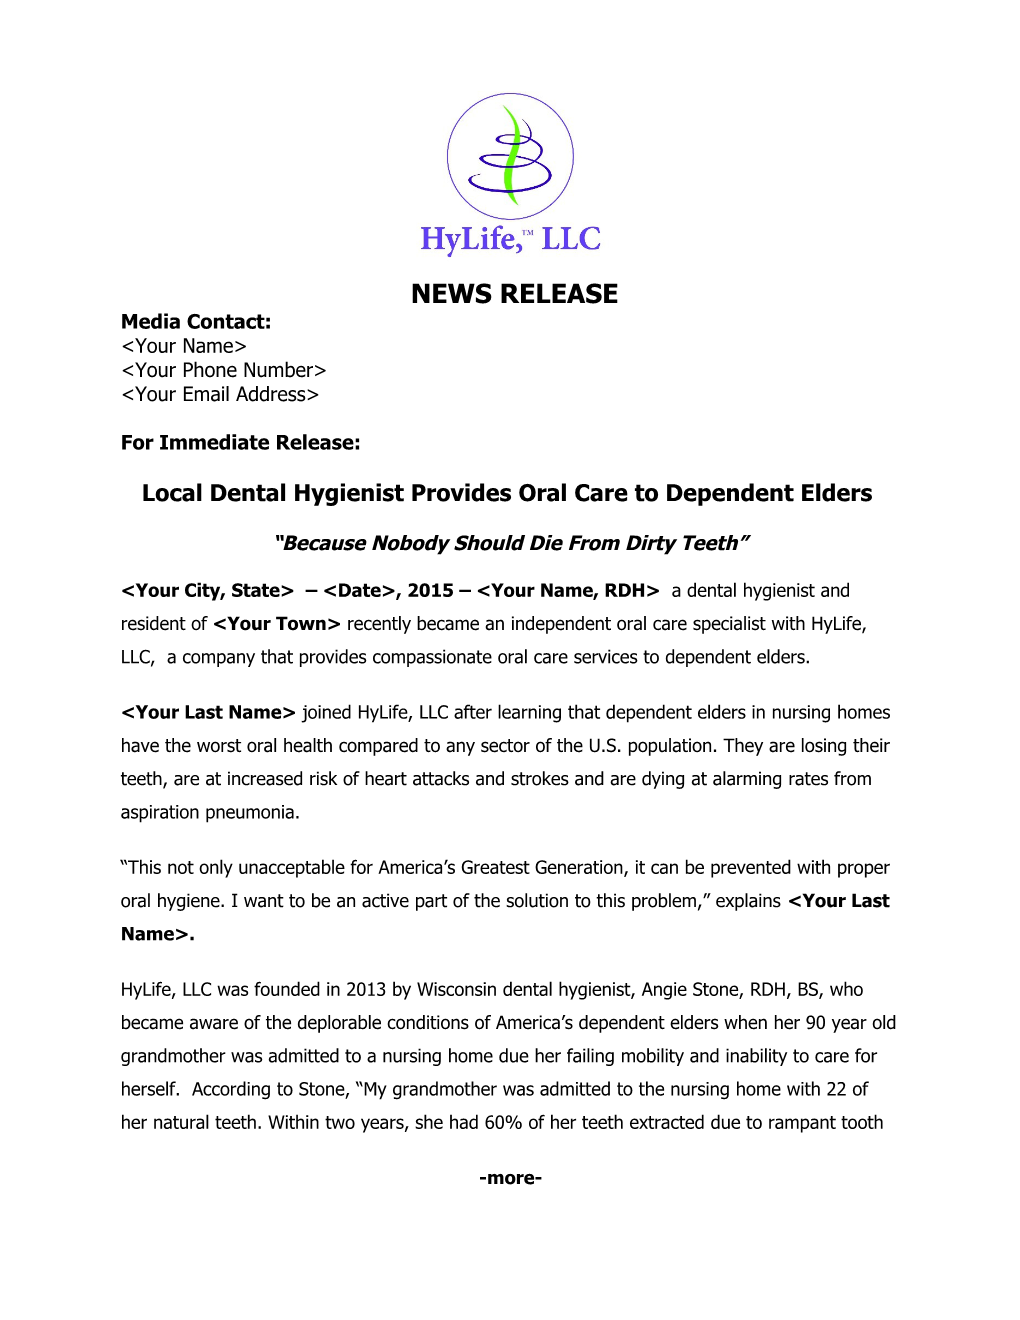 Local Dental Hygienist Provides Oral Care to Dependent Elders